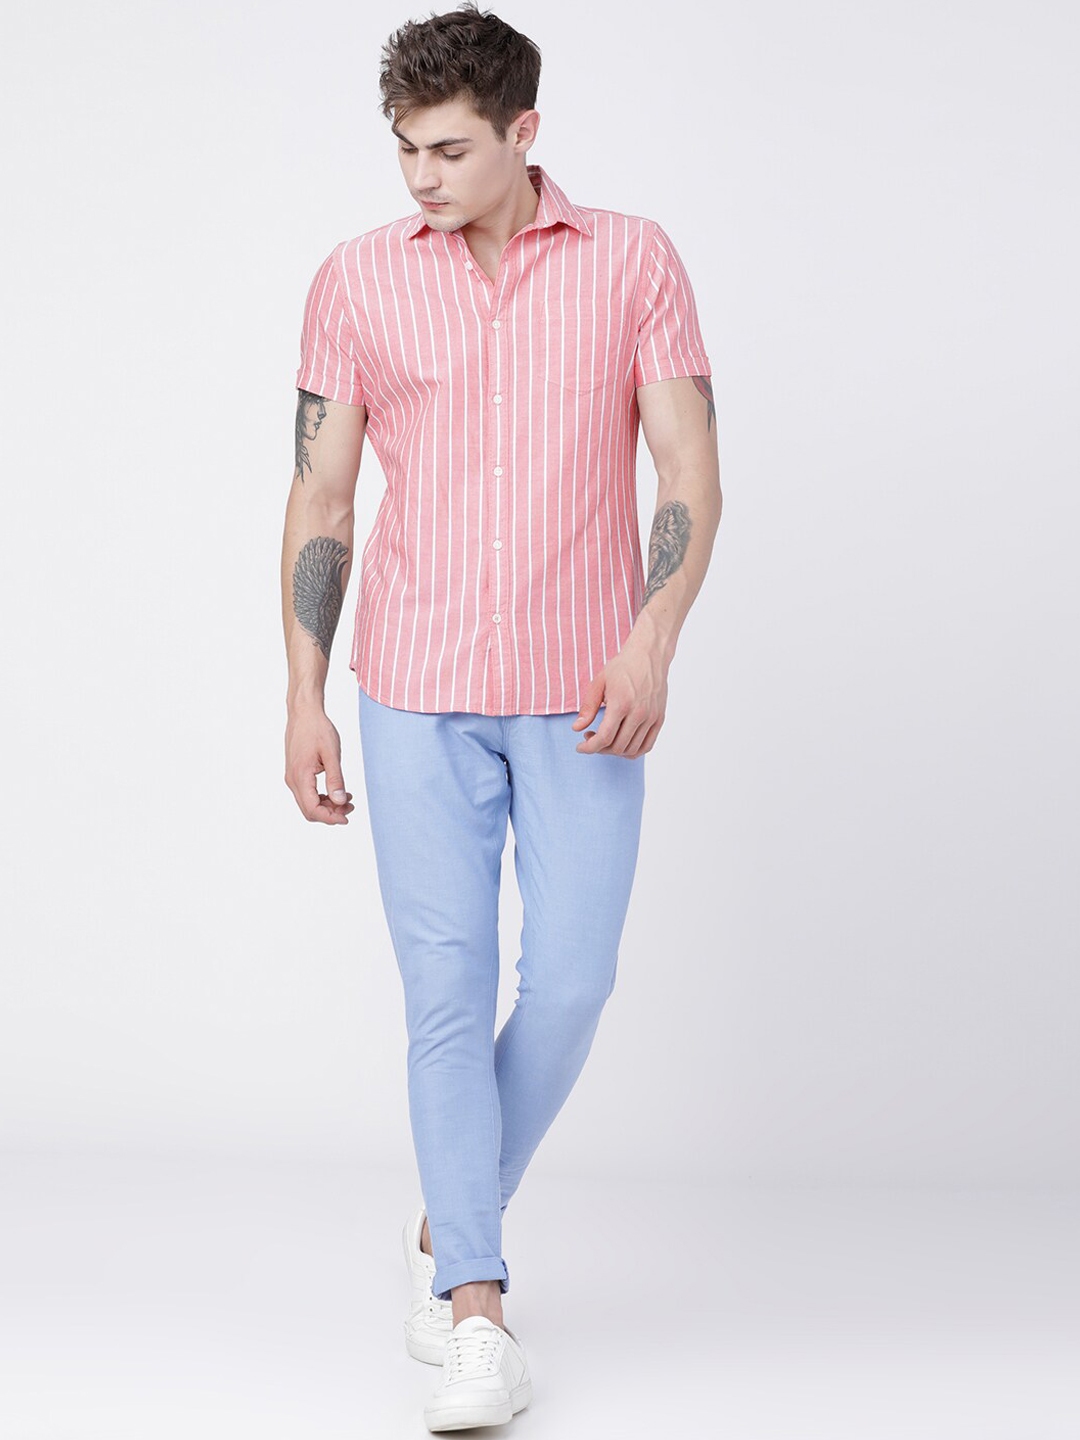 Buy Highlander Beige & White Slim Fit Striped Casual Shirt for Men